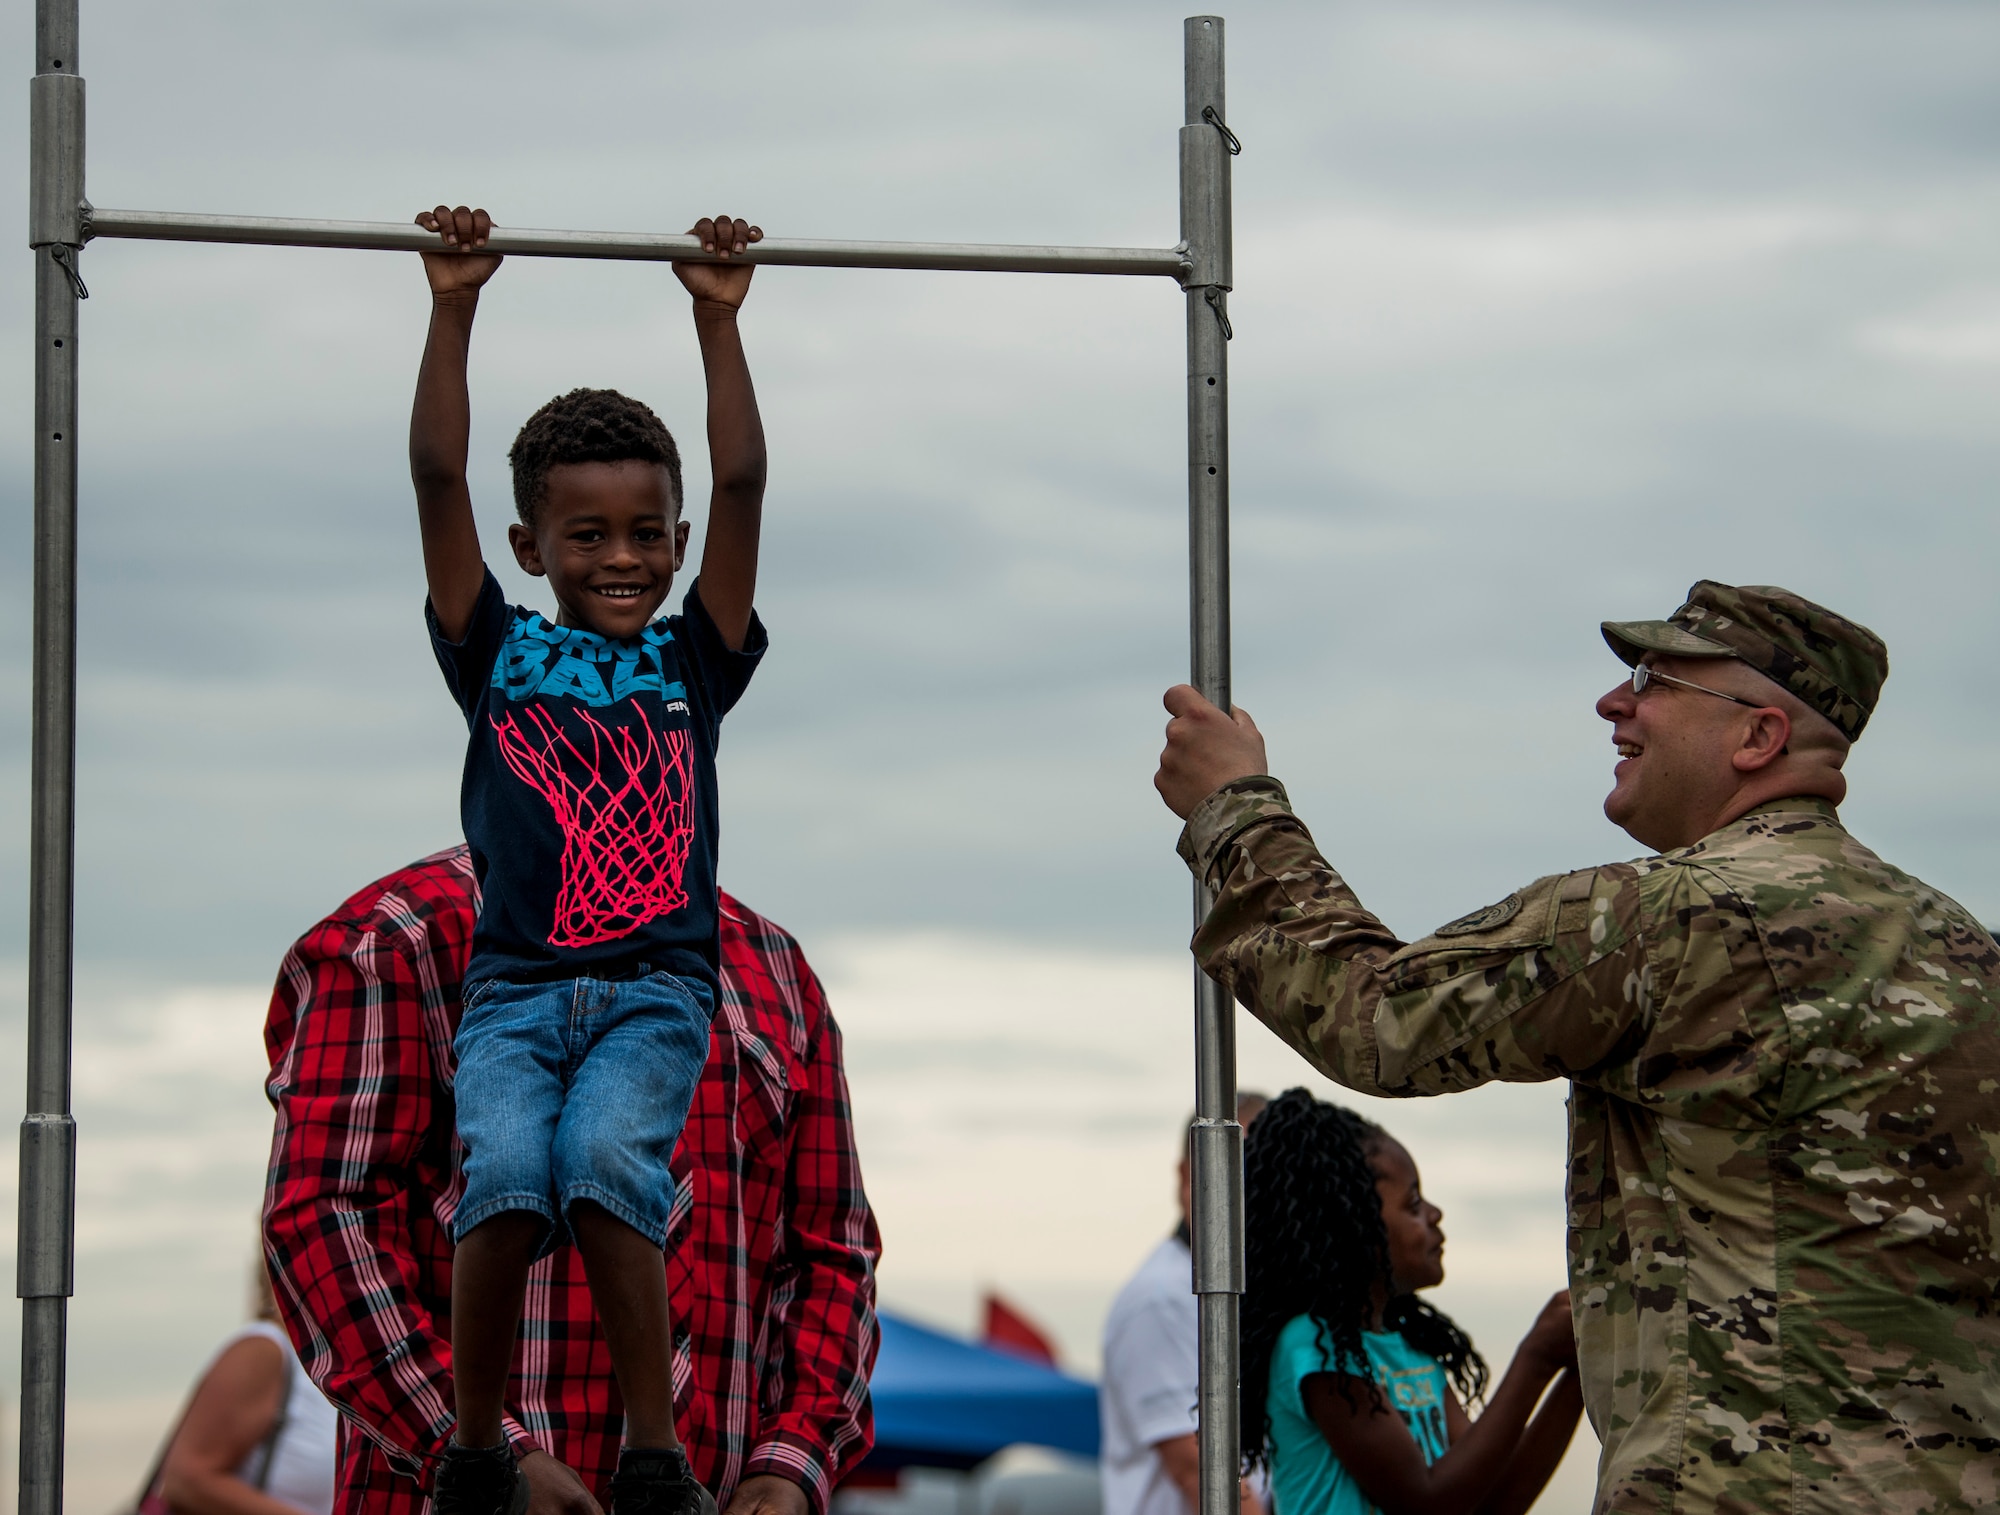 A child tries out a pull-up bar at a U.S. Army recruitment tent during Tampa Bay AirFest 2018 at MacDill Air Force Base, Fla., May 13, 2018.